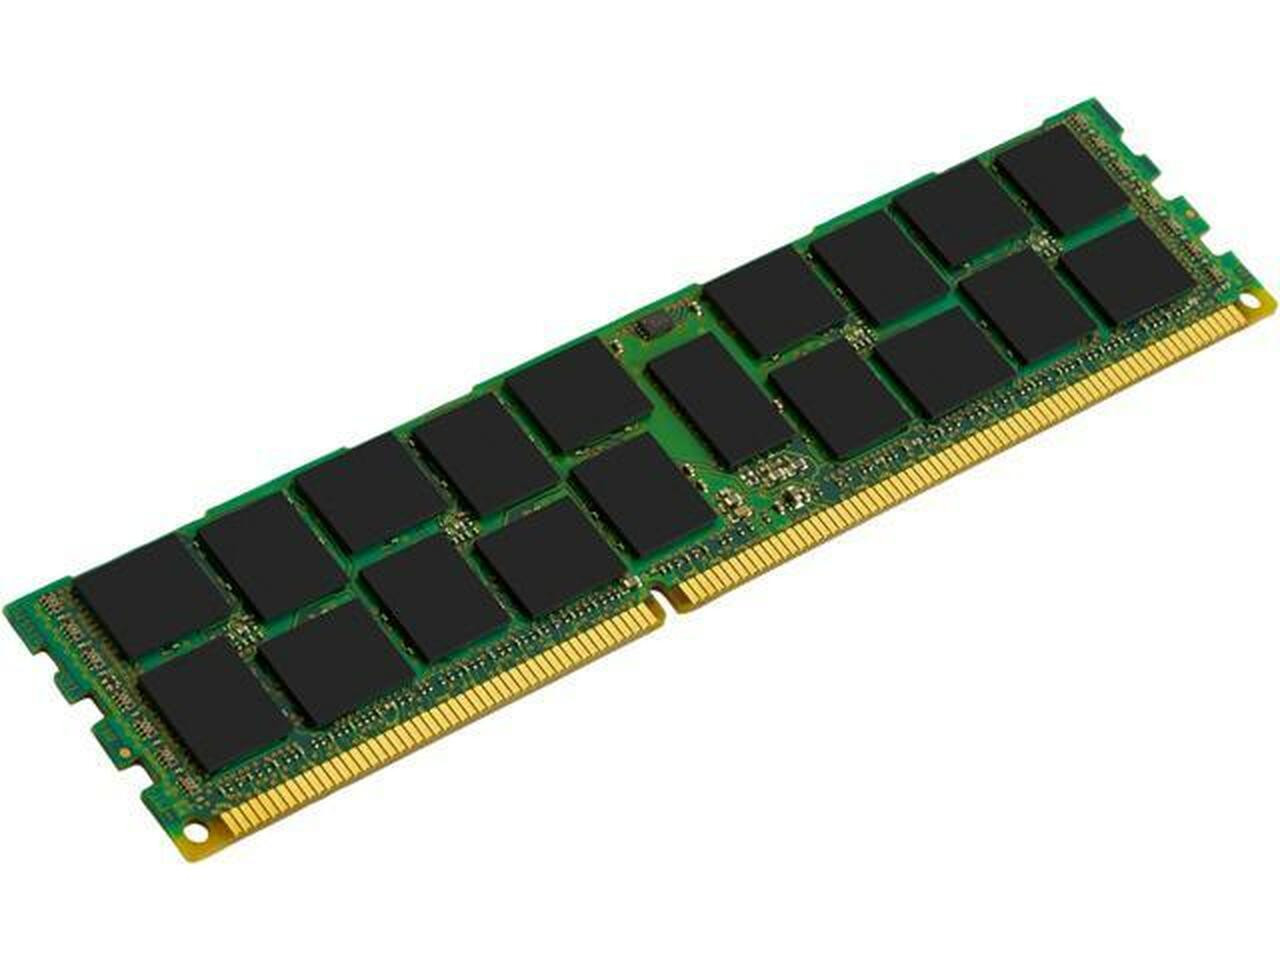 Netpatibles 16GB DDR4 SDRAM Memory Module - AA810826-NPM